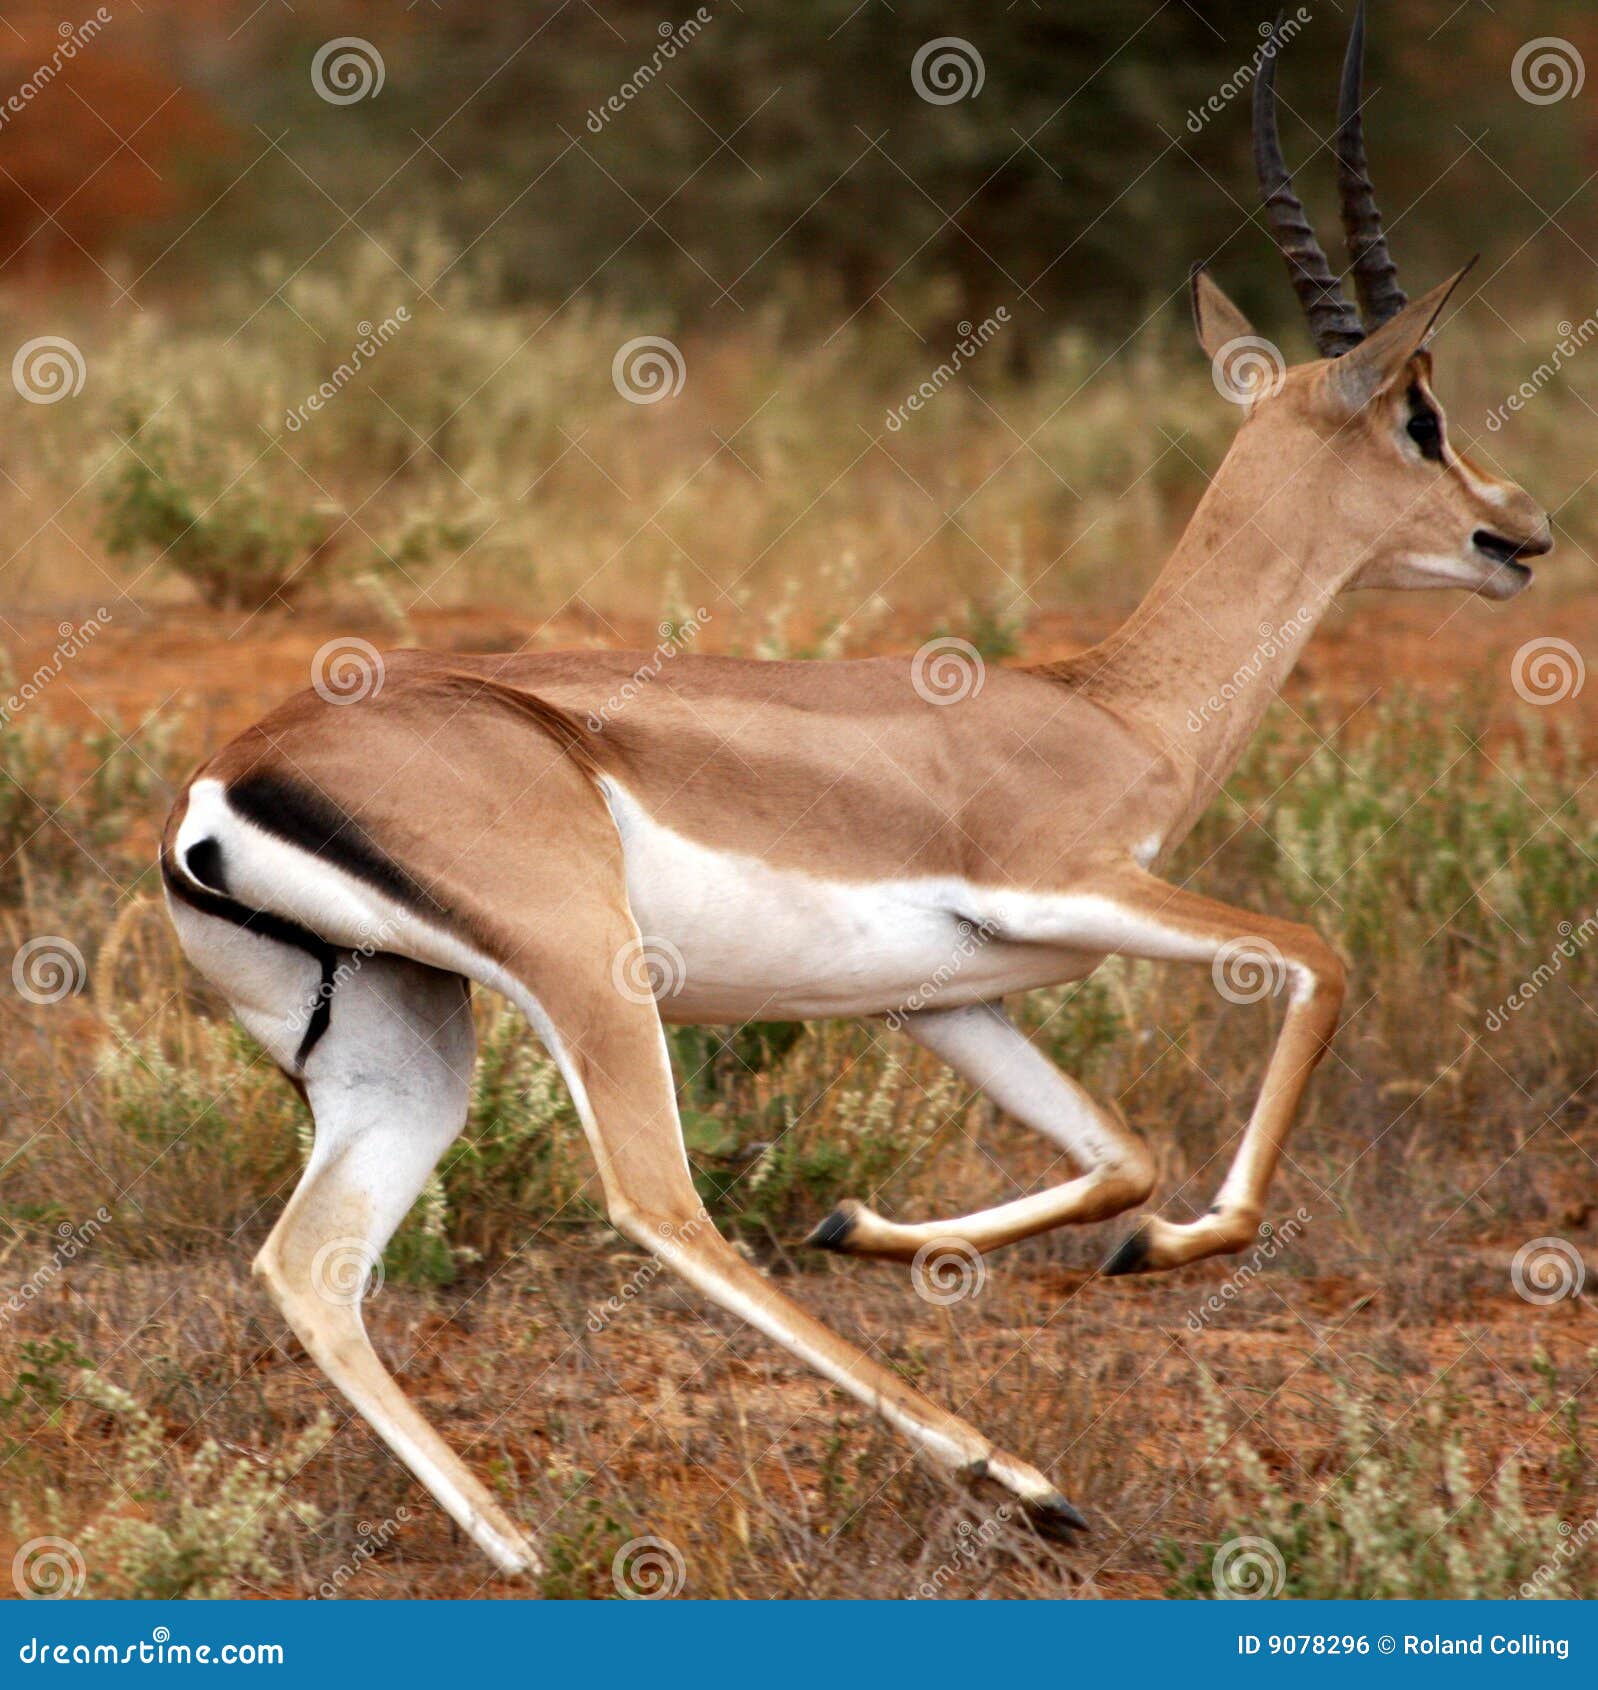 gazelle action shot